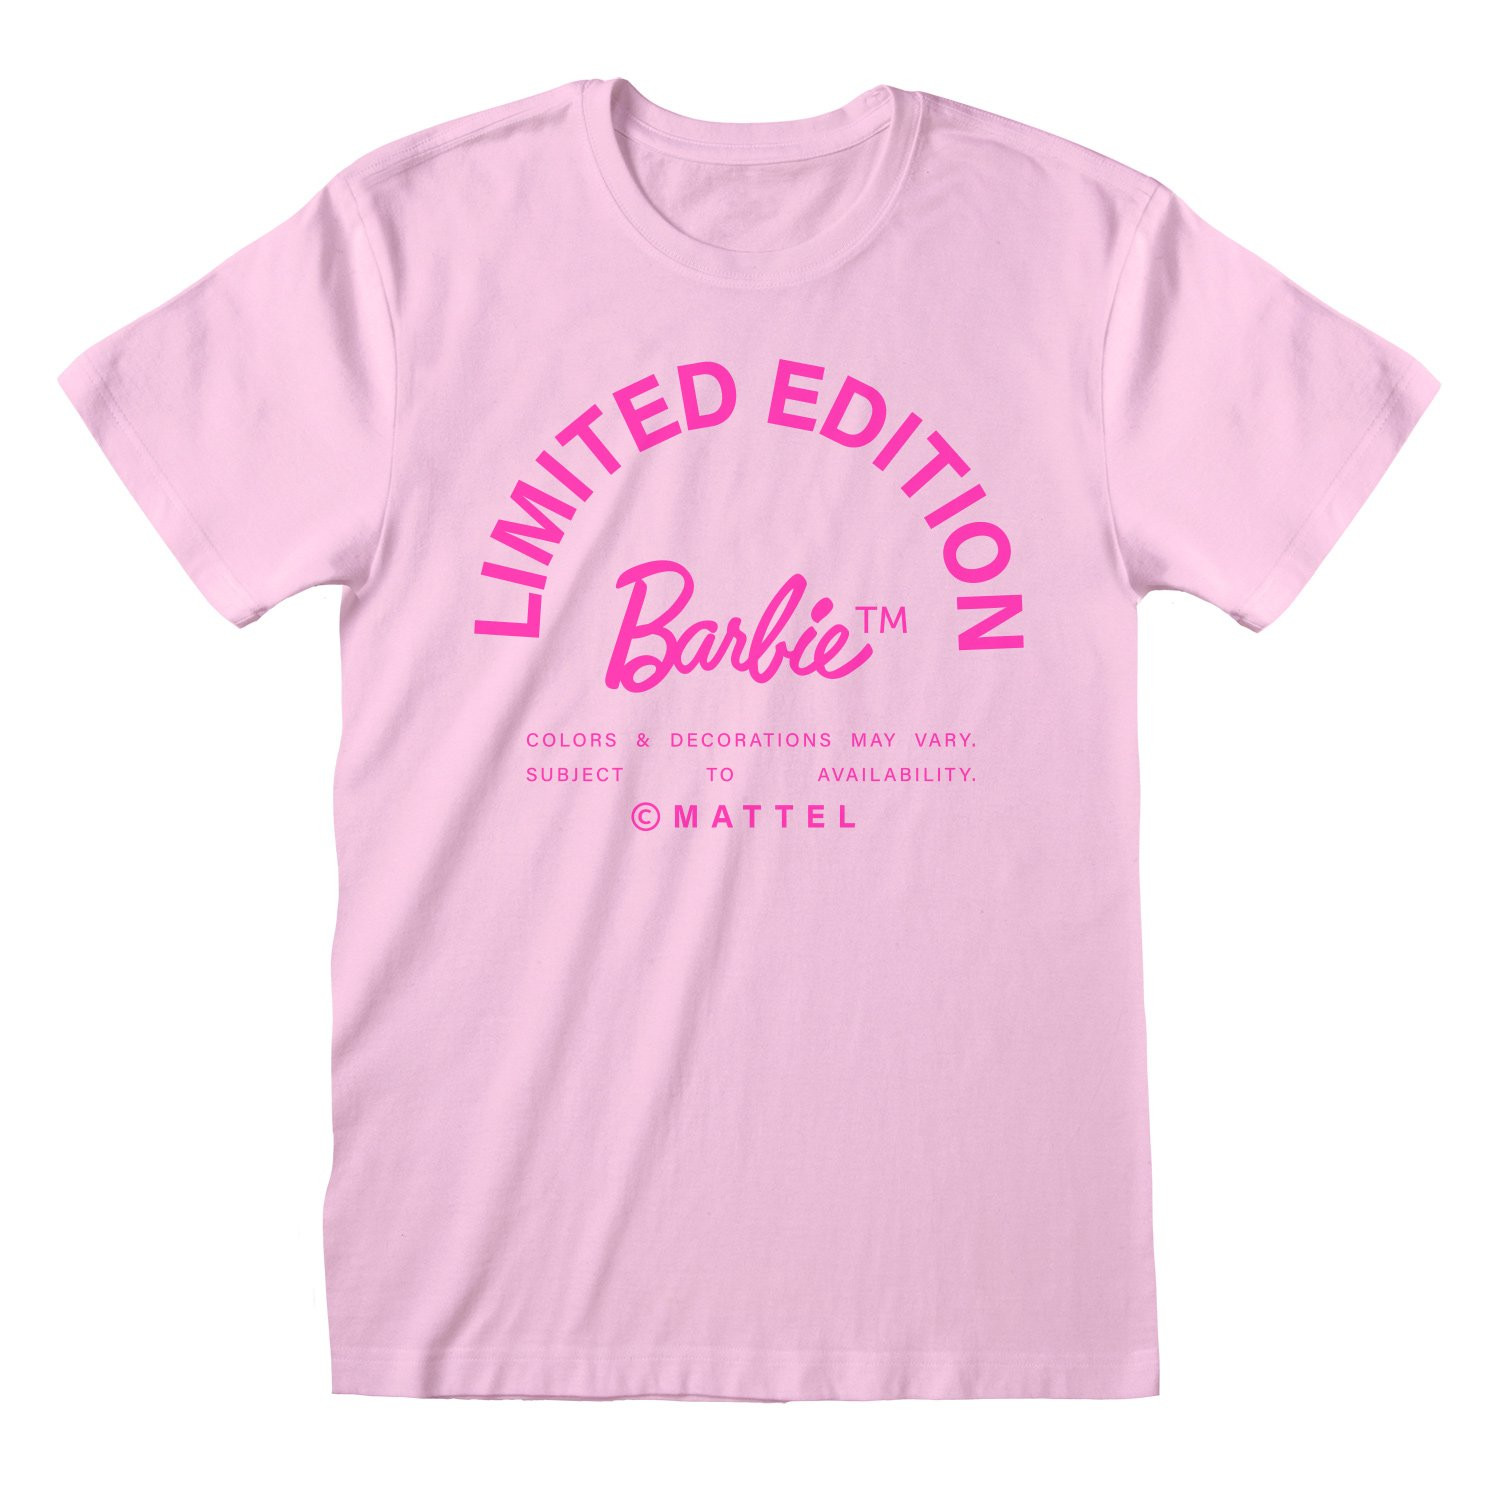 Camiseta Barbie Limited Edition por 22,90€ 